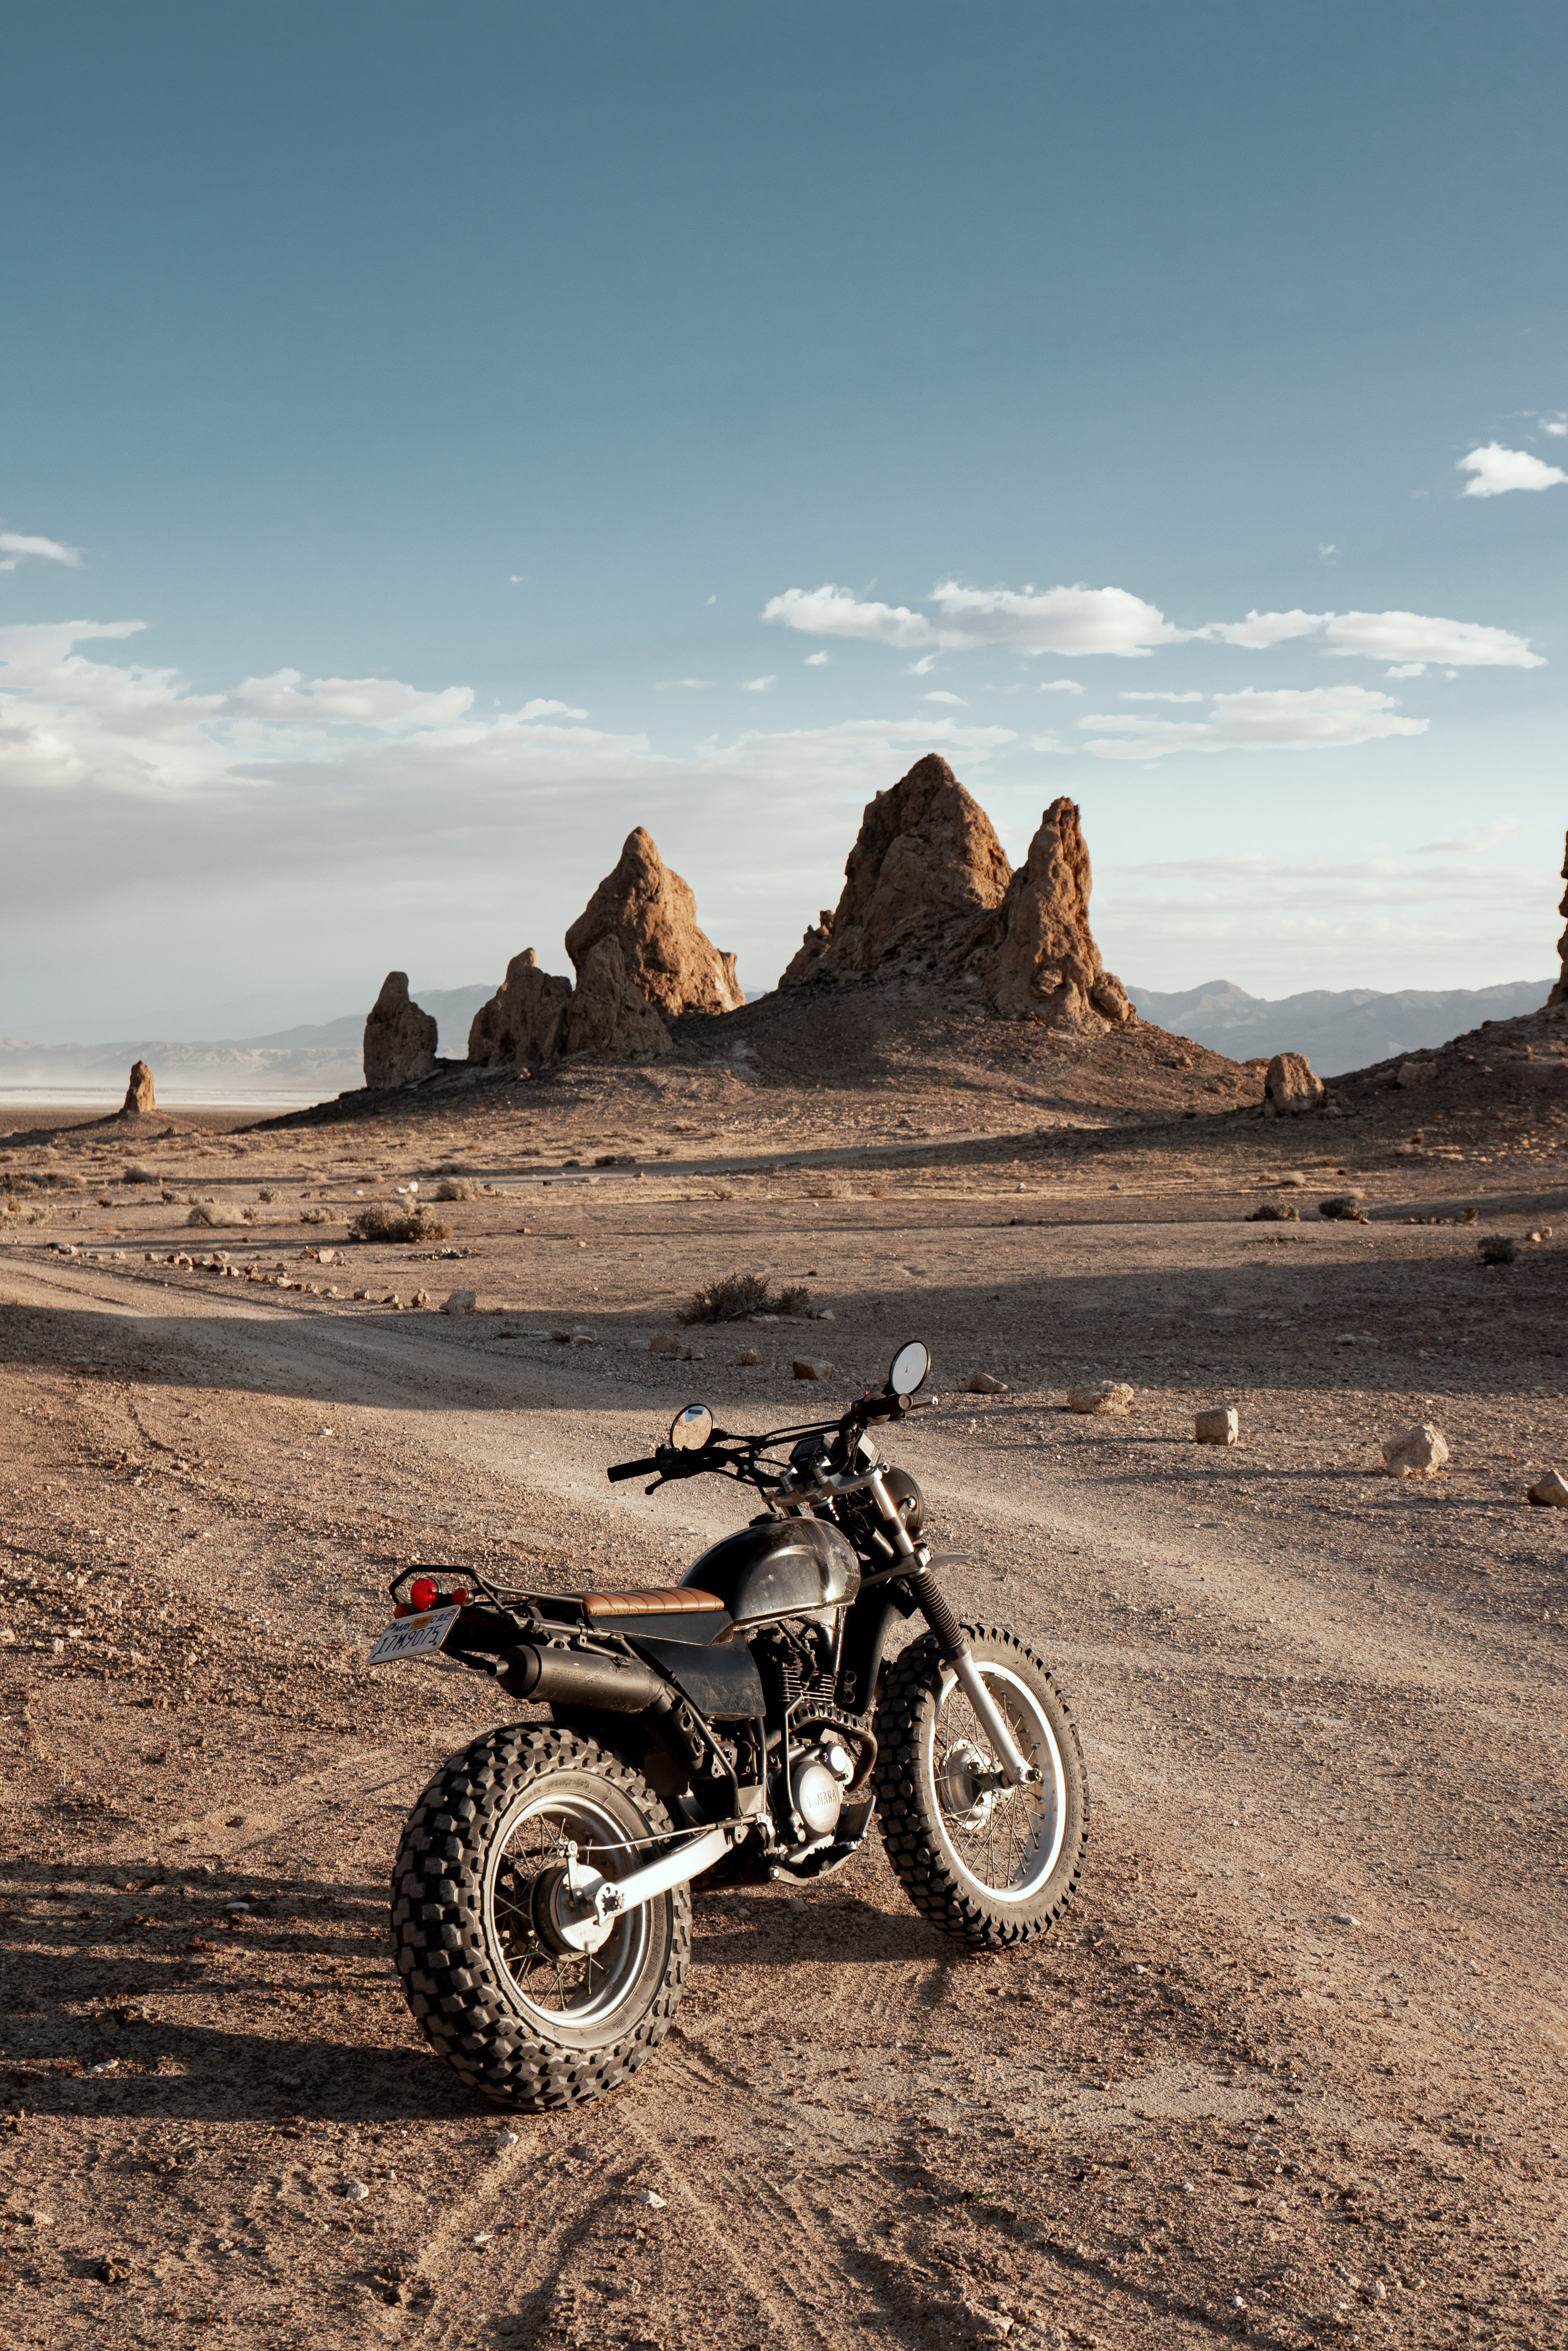 rocks, desert, motorcycles, motorcycle, motorcycling